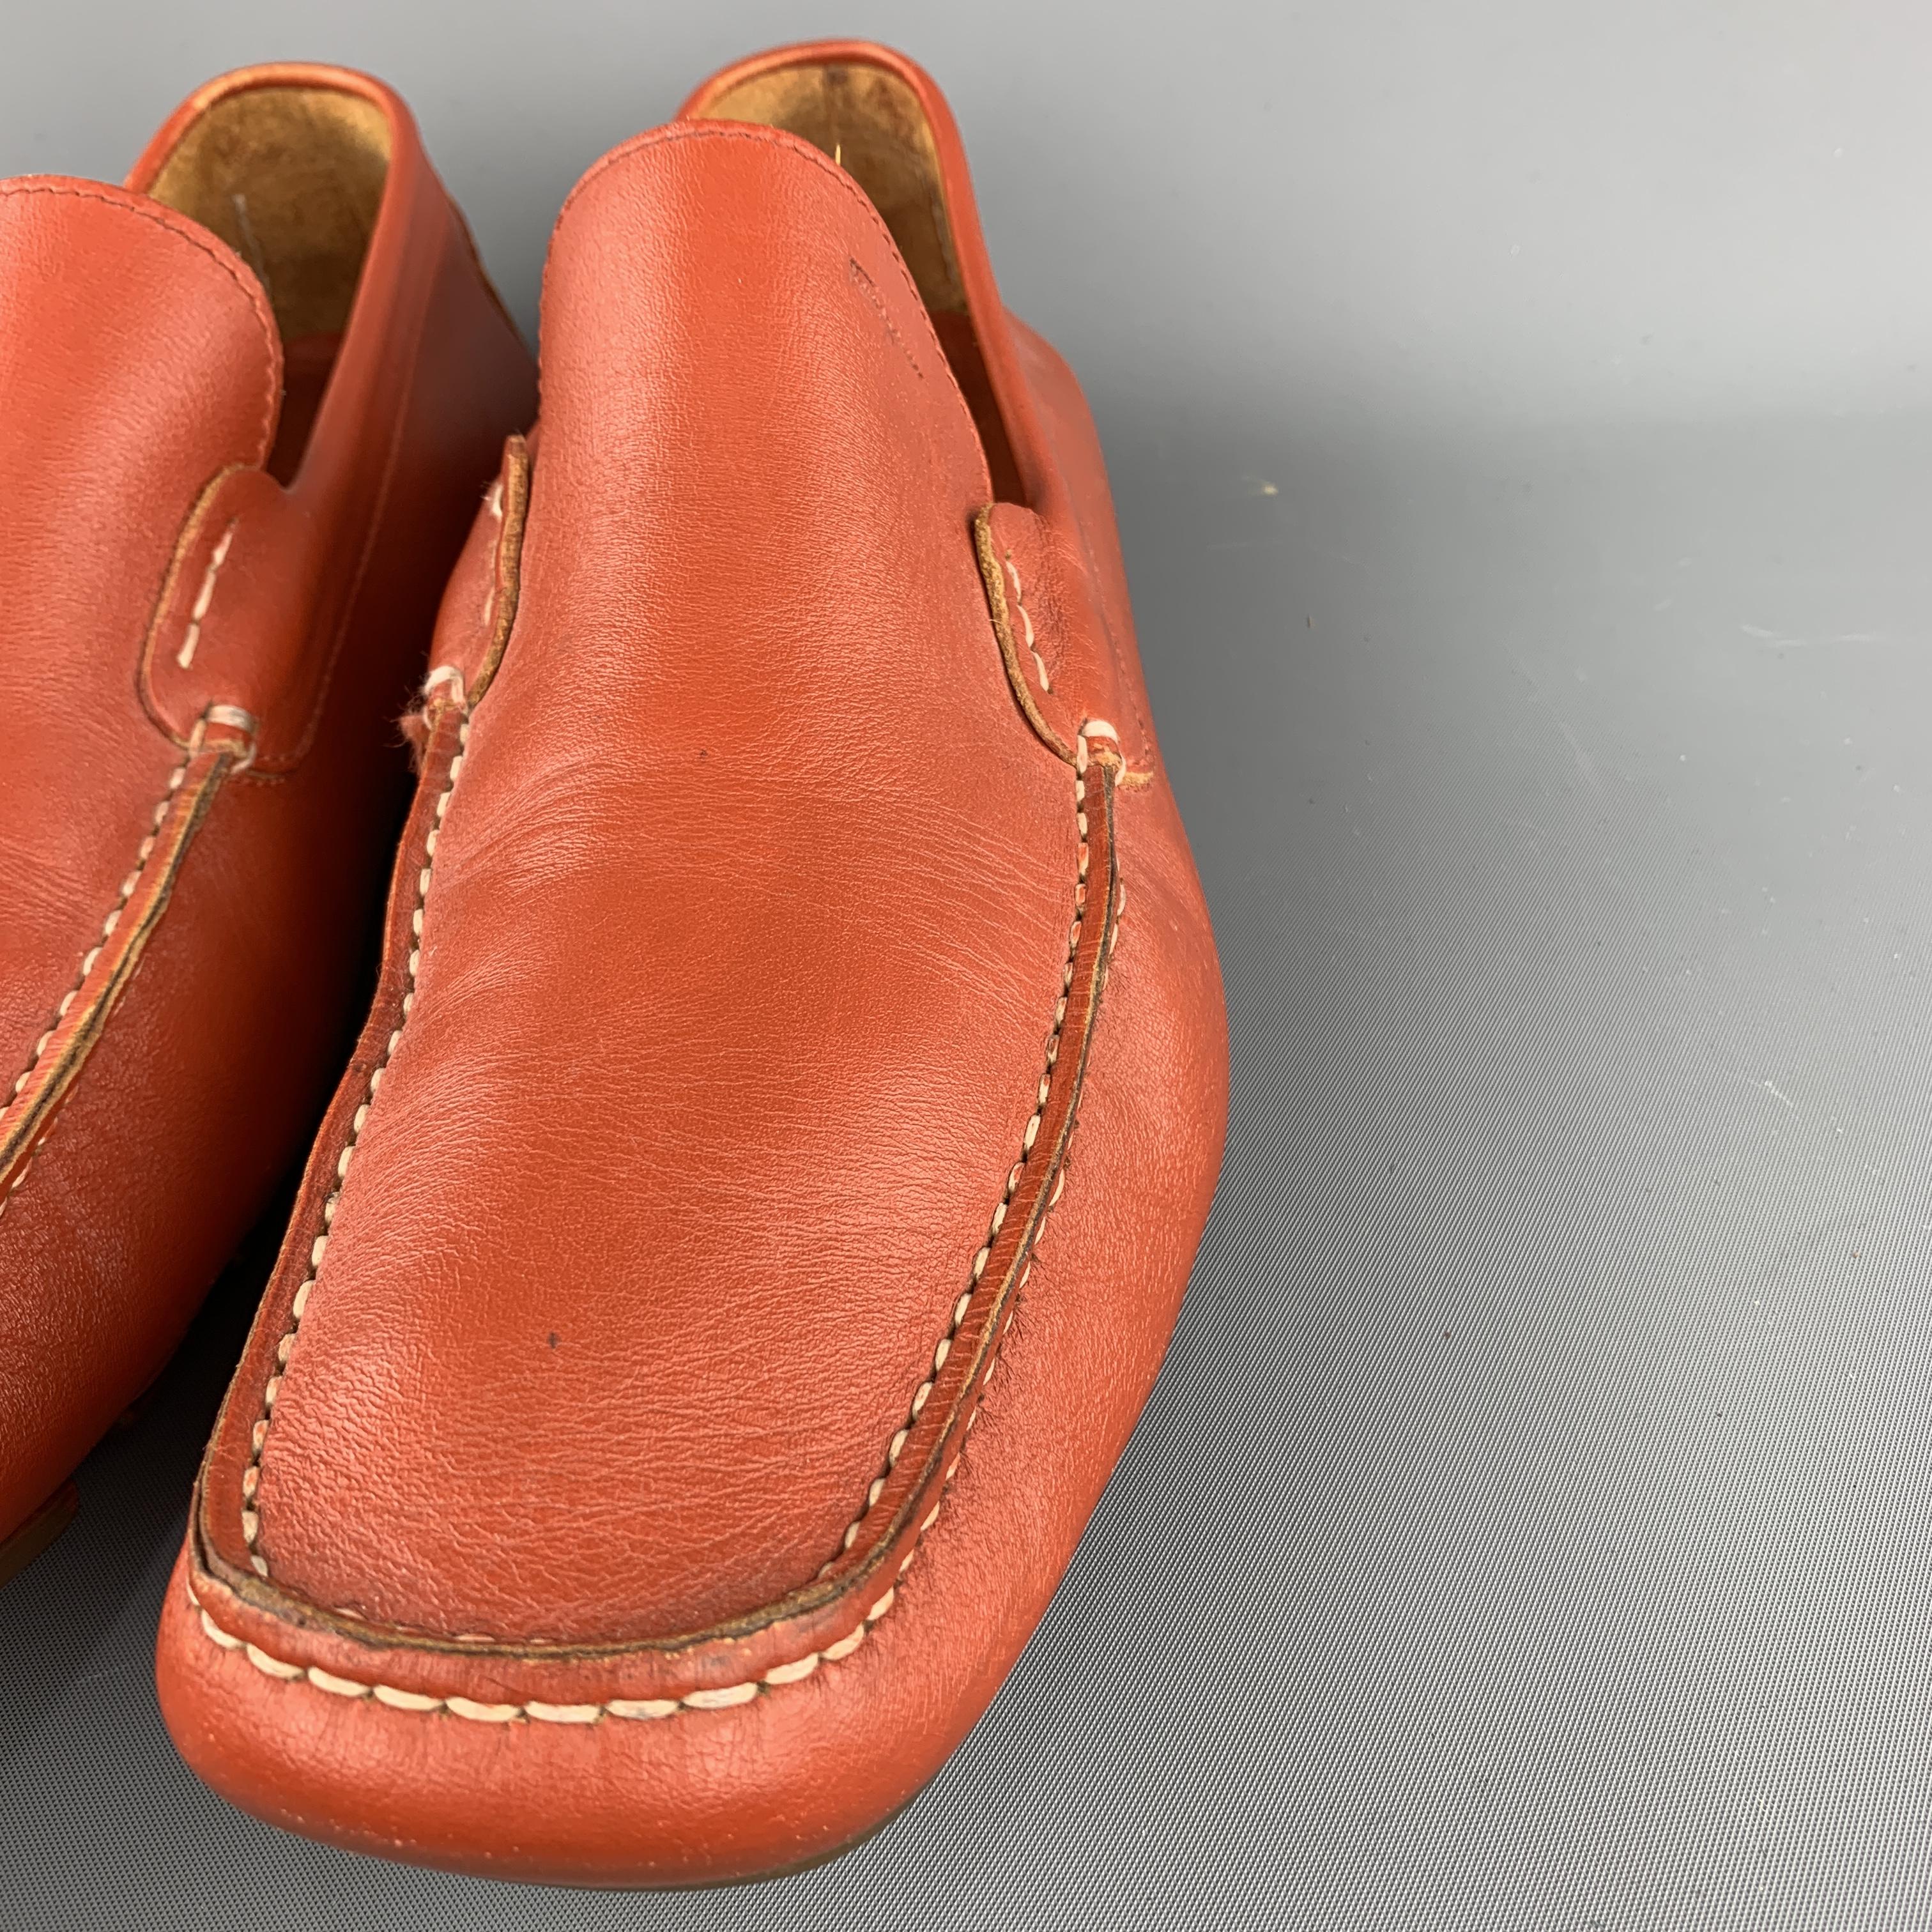 Men's SALVATORE FERRAGAMO Size 10.5 Brick Solid Leather Drivers Loafers